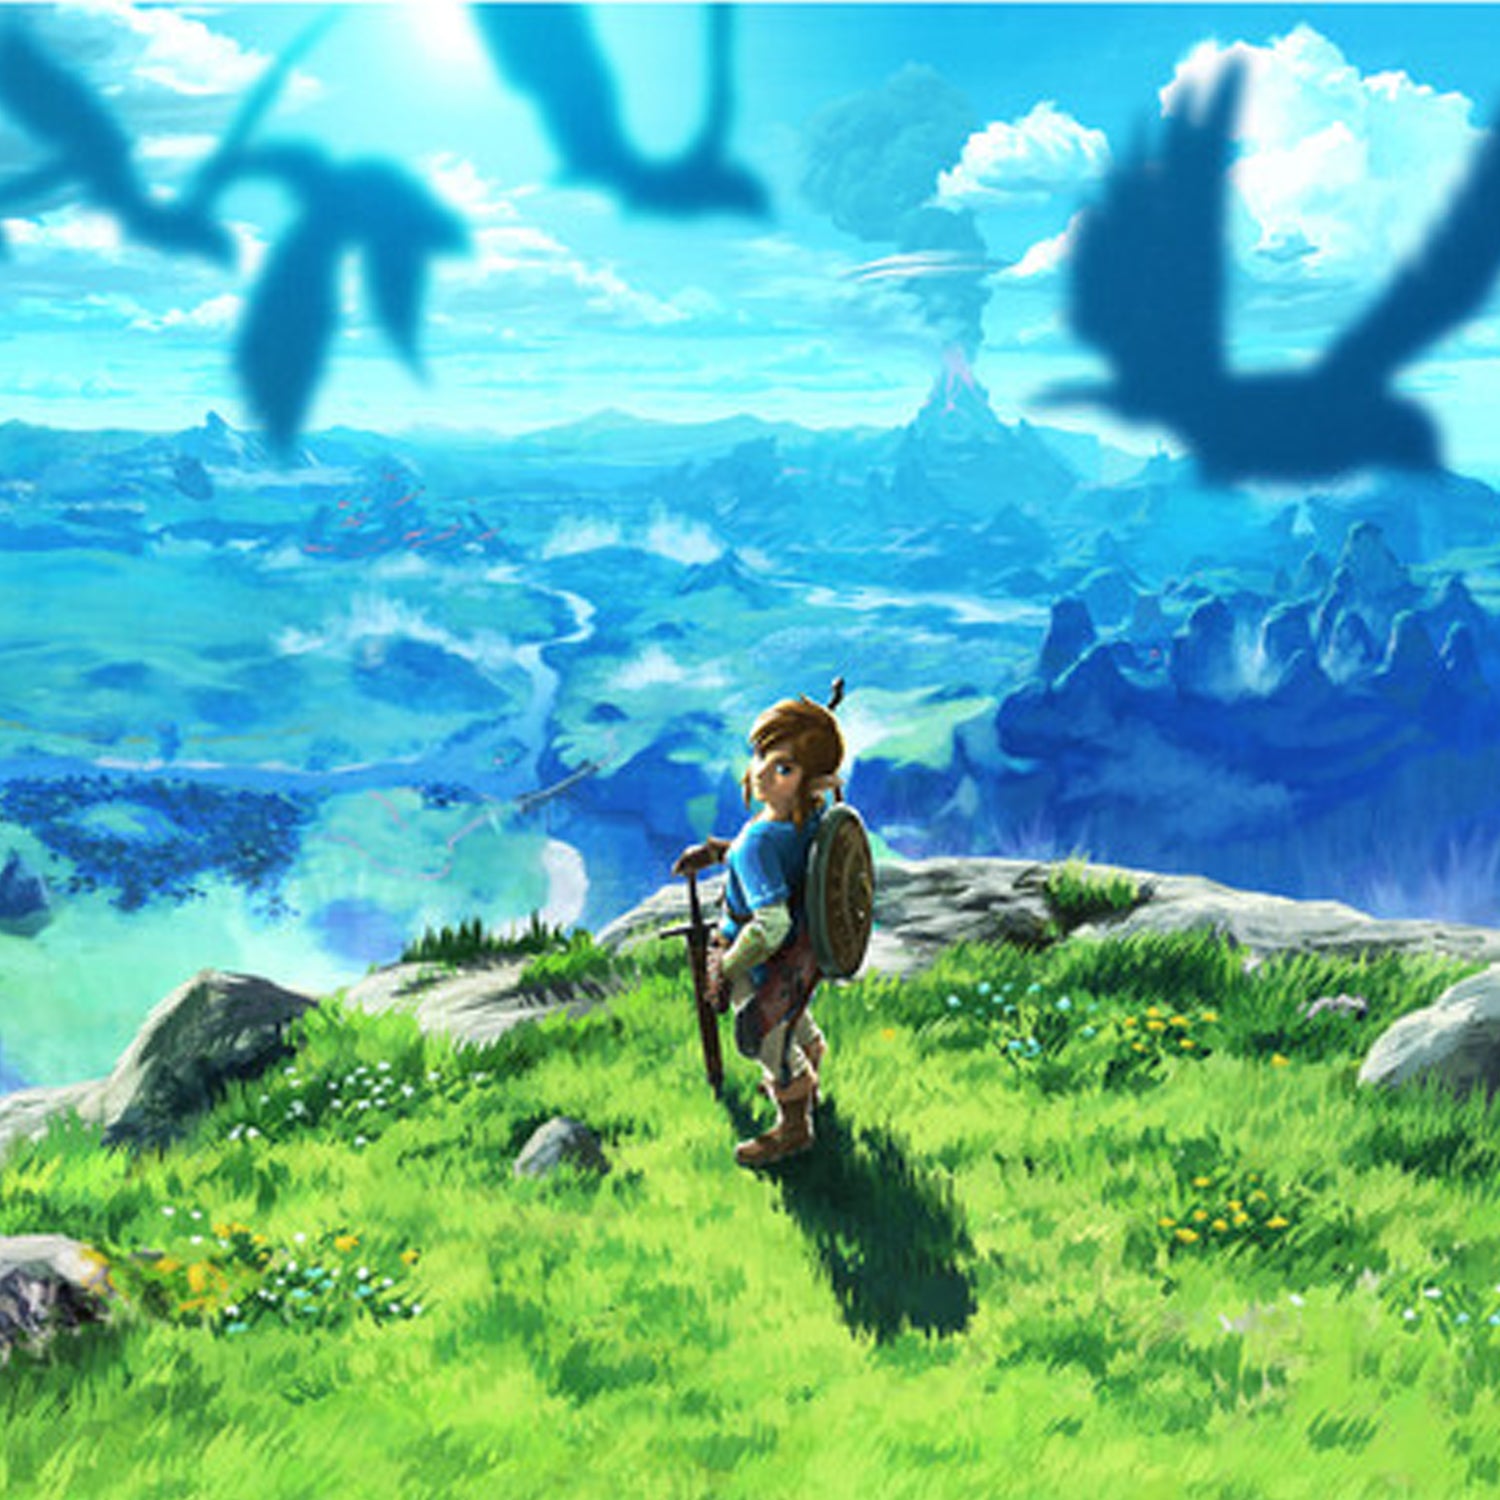 No More Heroes 3 Bundle with Zelda: Breath of the Wild - Nintendo Switch